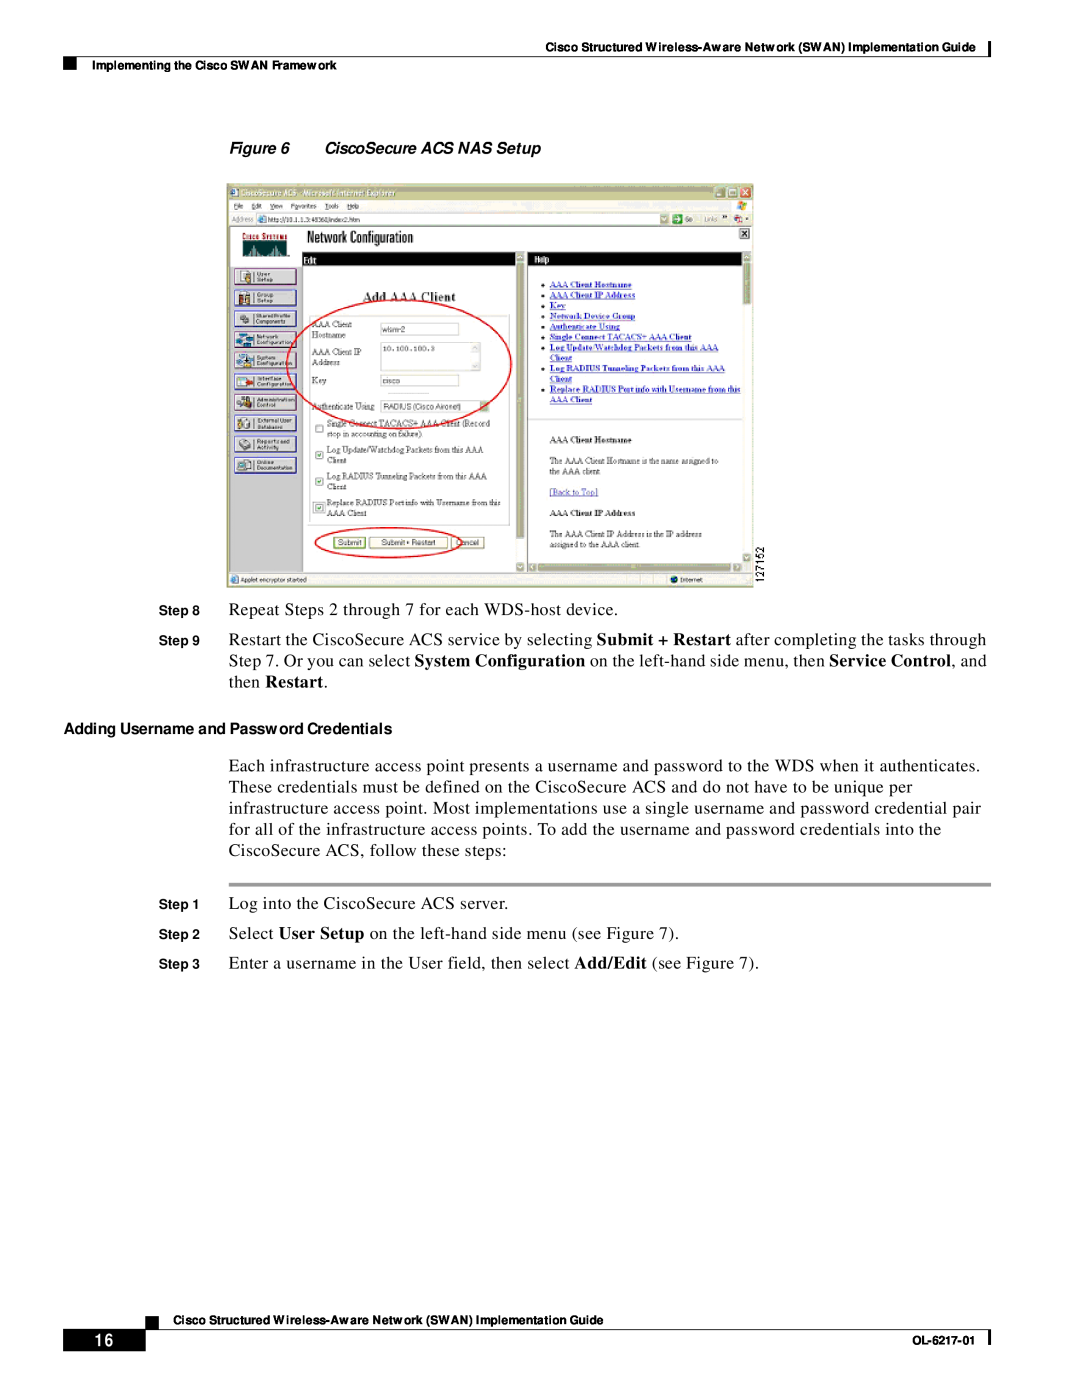 Cisco Systems OL-6217-01 manual Adding Username and Password Credentials, CiscoSecure ACS NAS Setup 